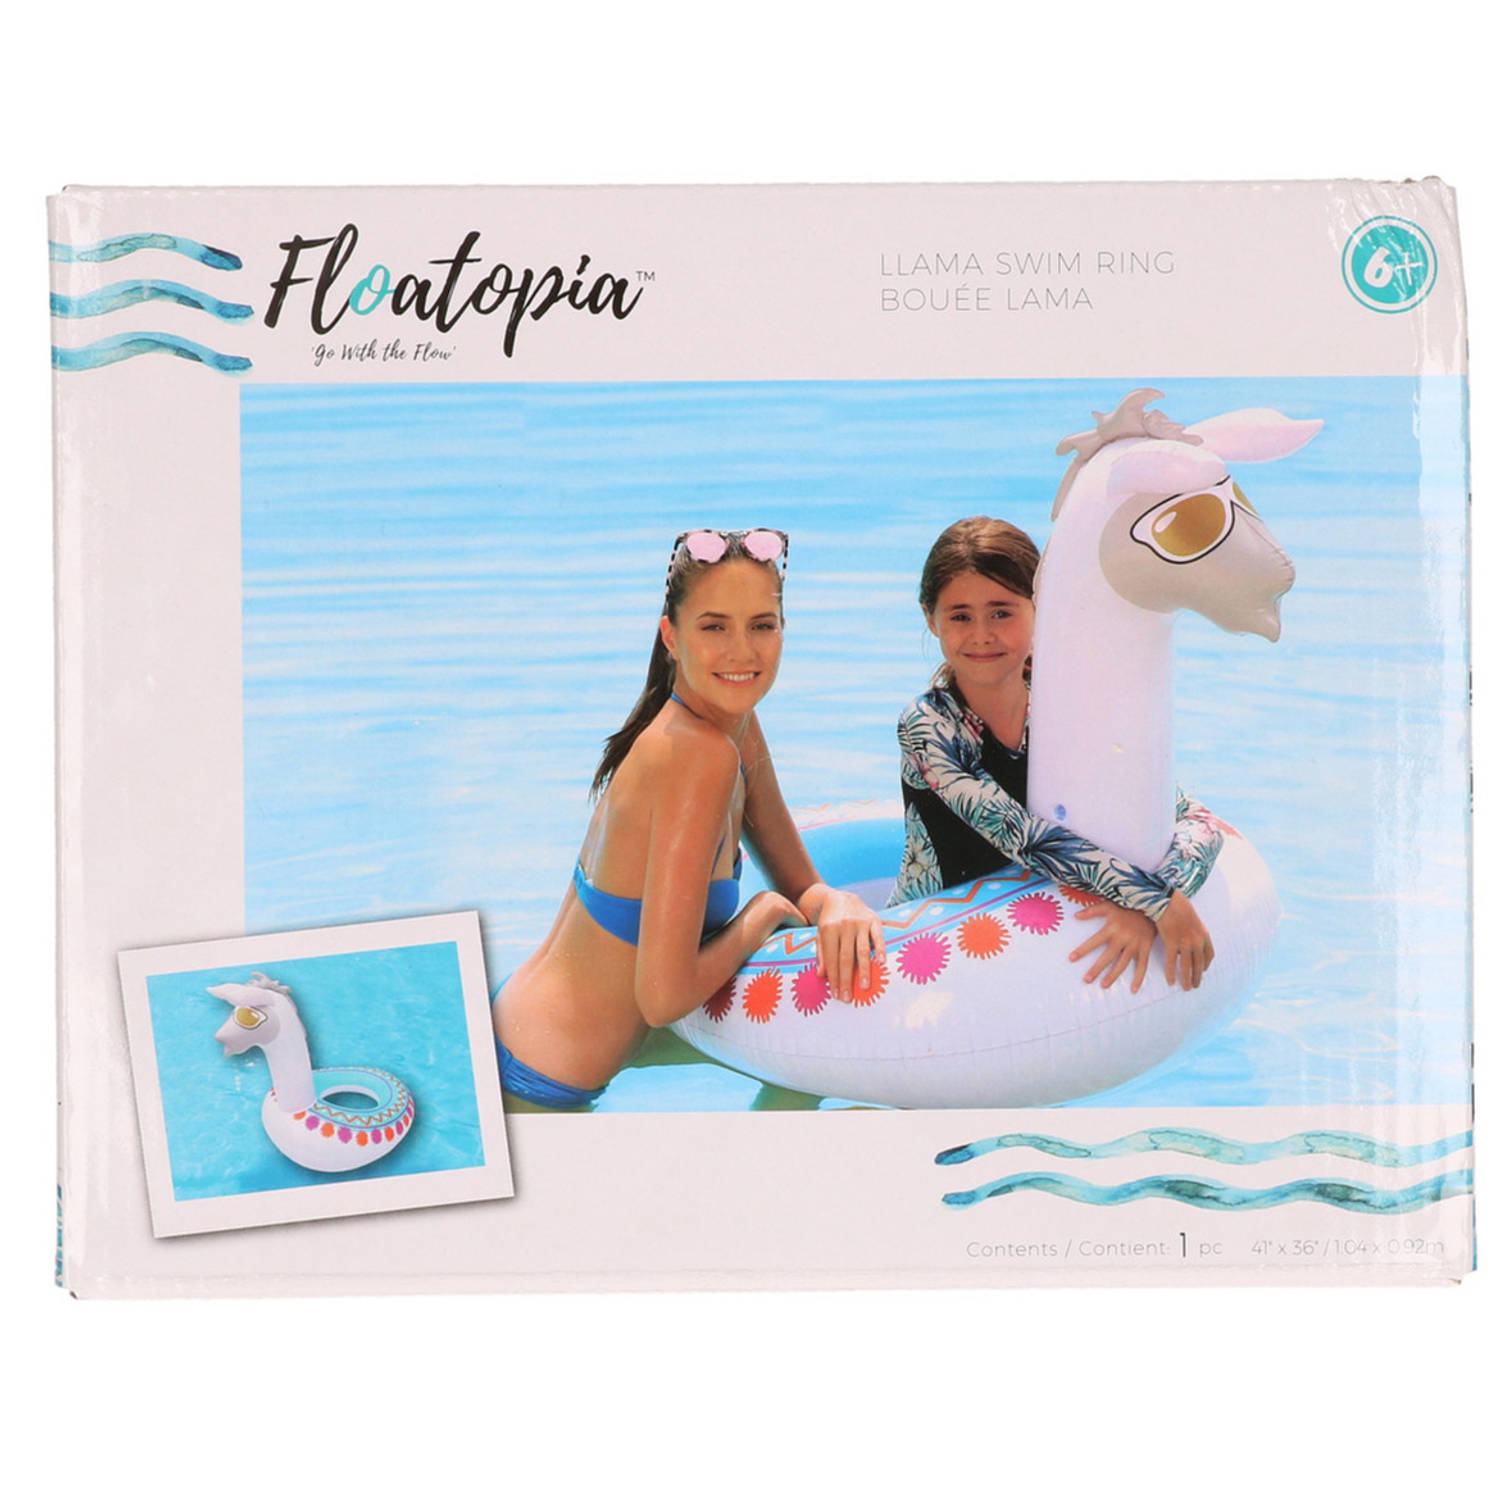 Wonder Gematigd Verstrooien Witte opblaasbare alpaca/lama 96 cm zwemband/zwemring - Zwembanden | Blokker